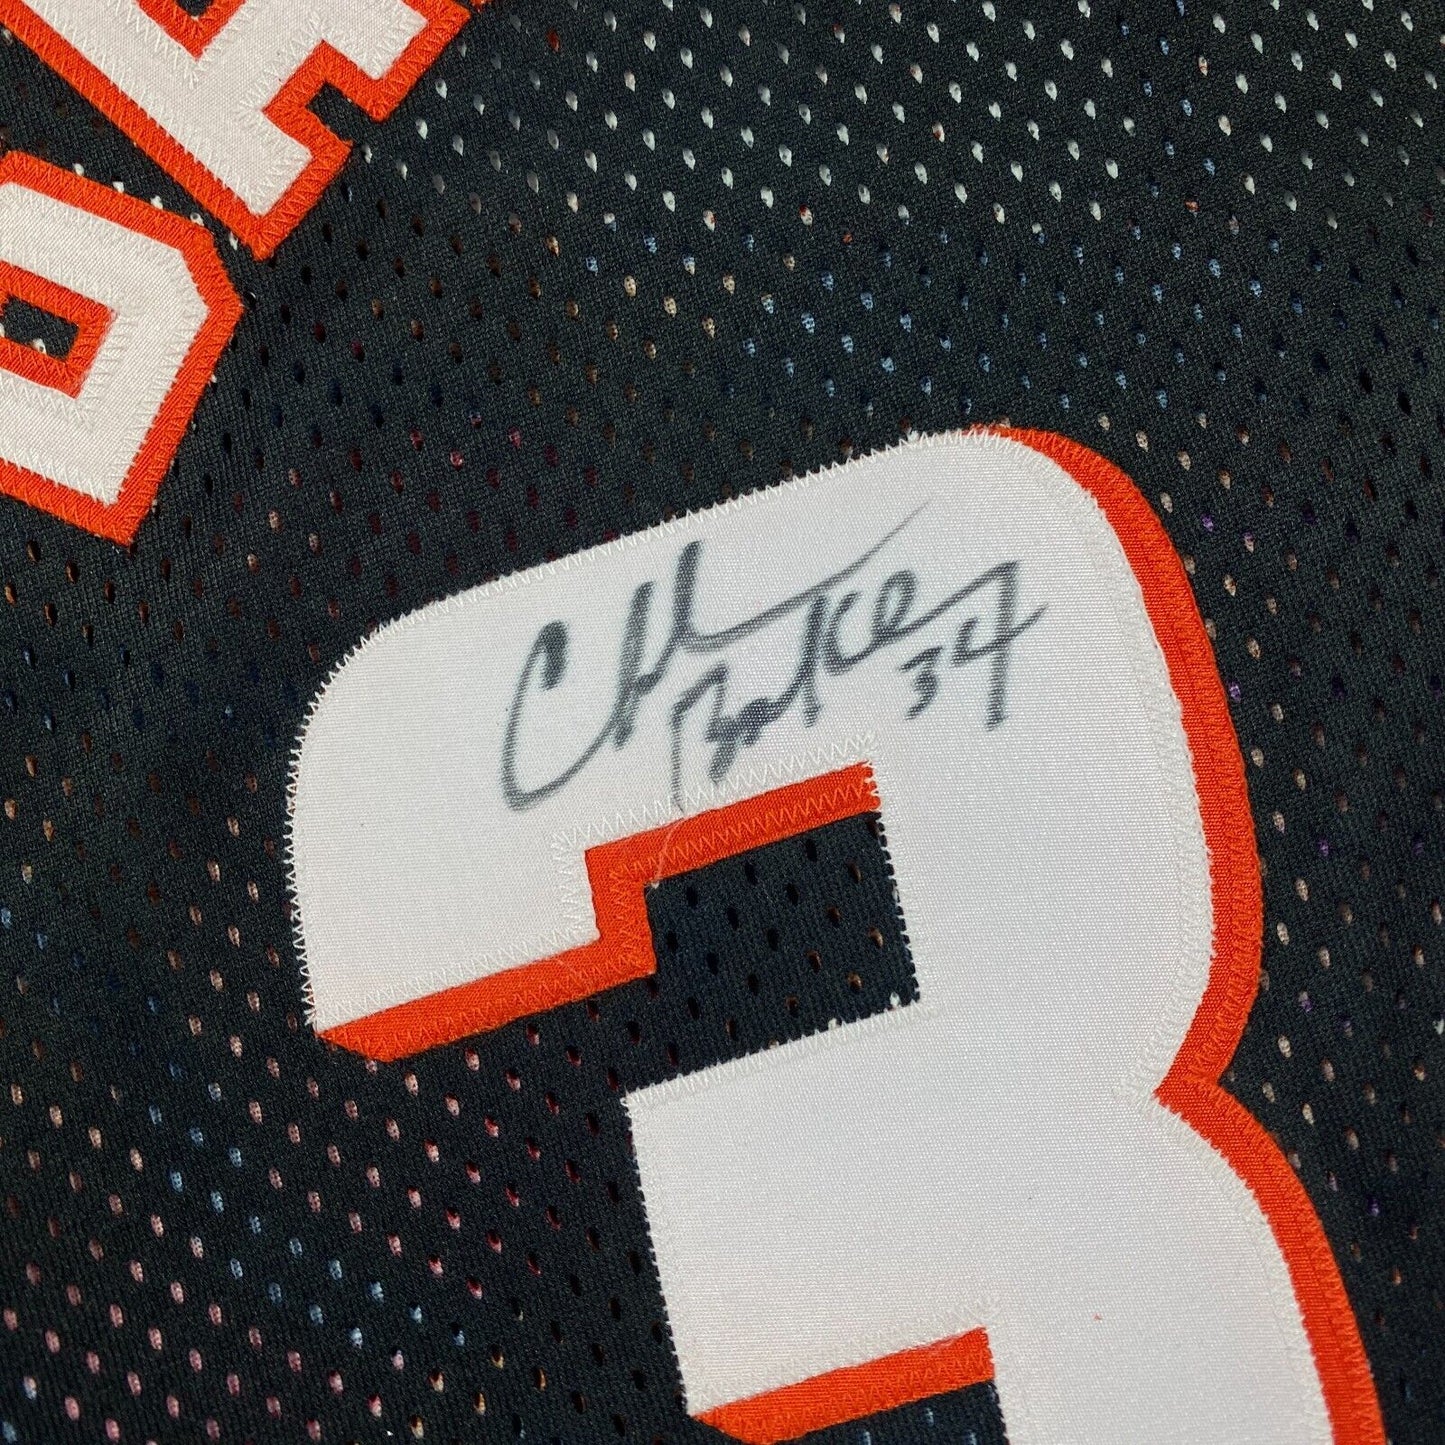 100% Authentic Charles Barkley Signed Vintage Champion Suns Jersey Size 48 JSA